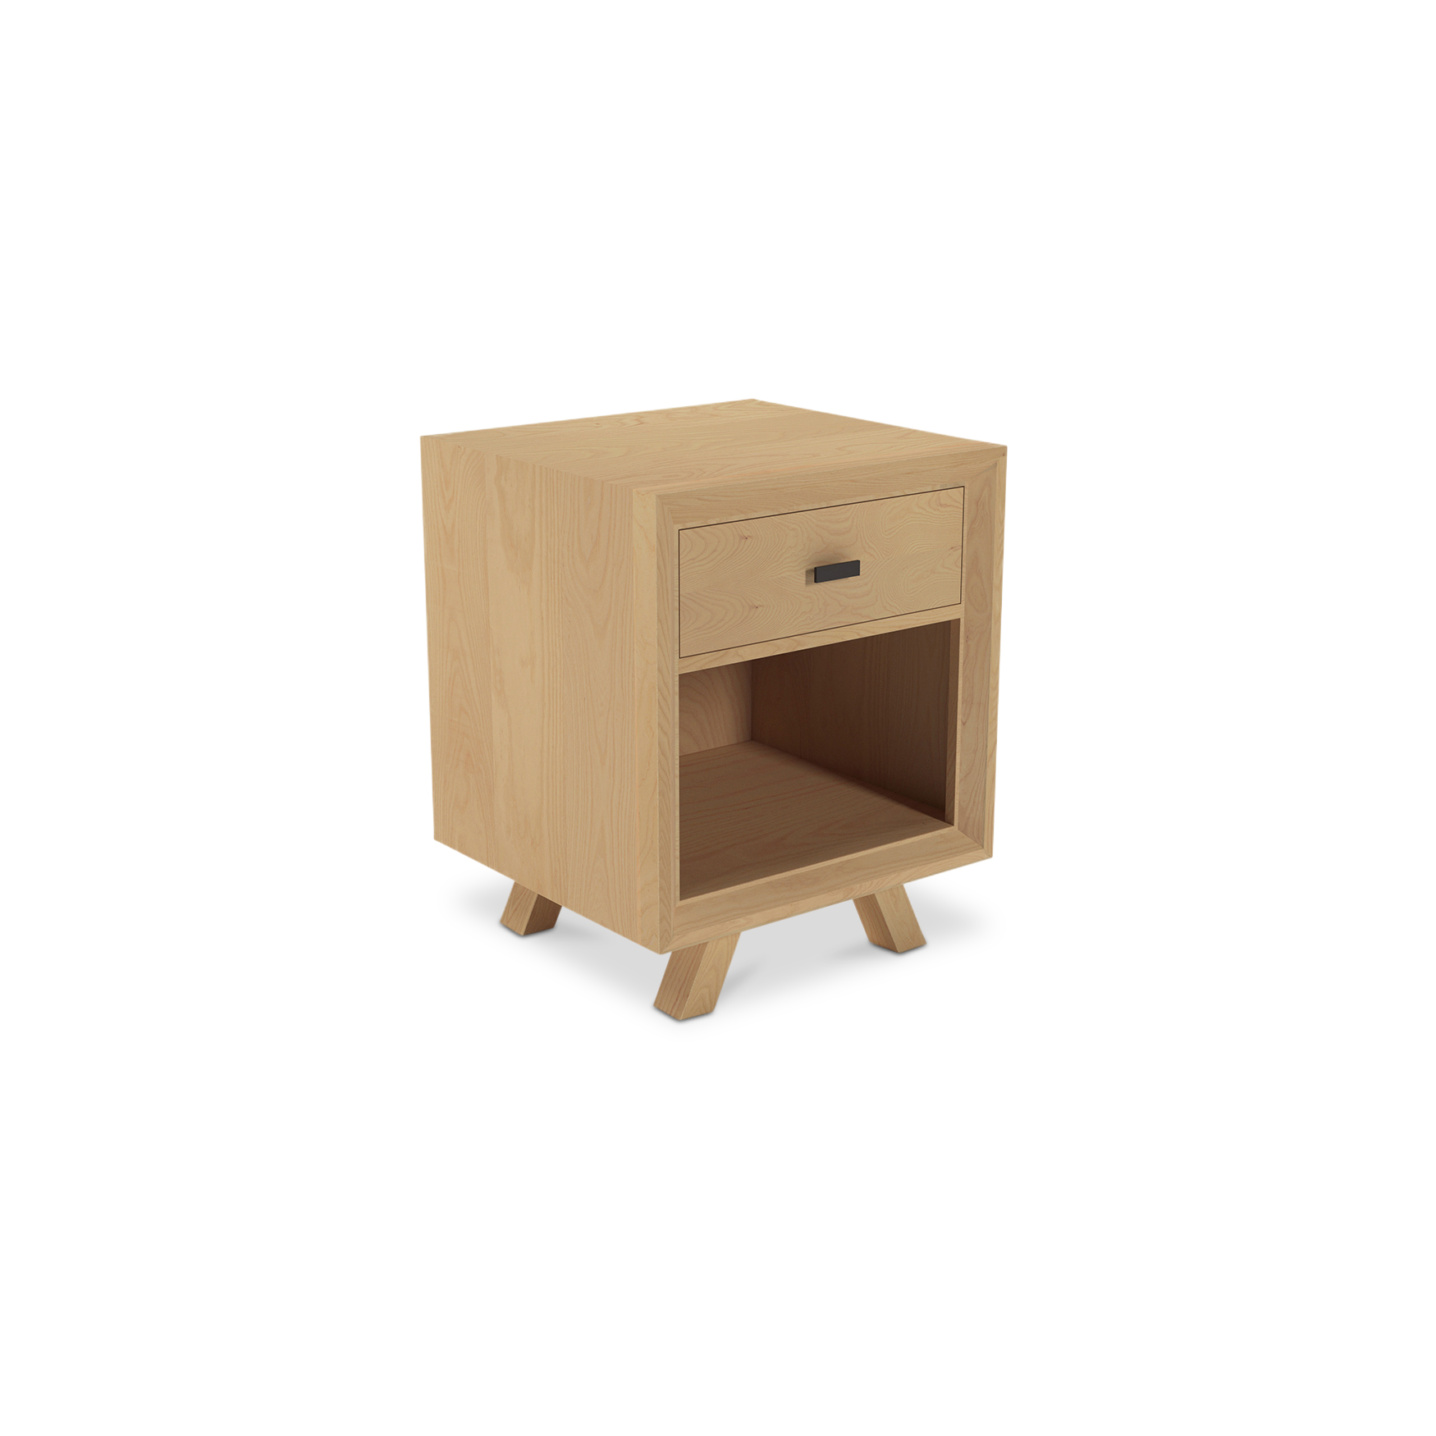 Small ash wood nightstand